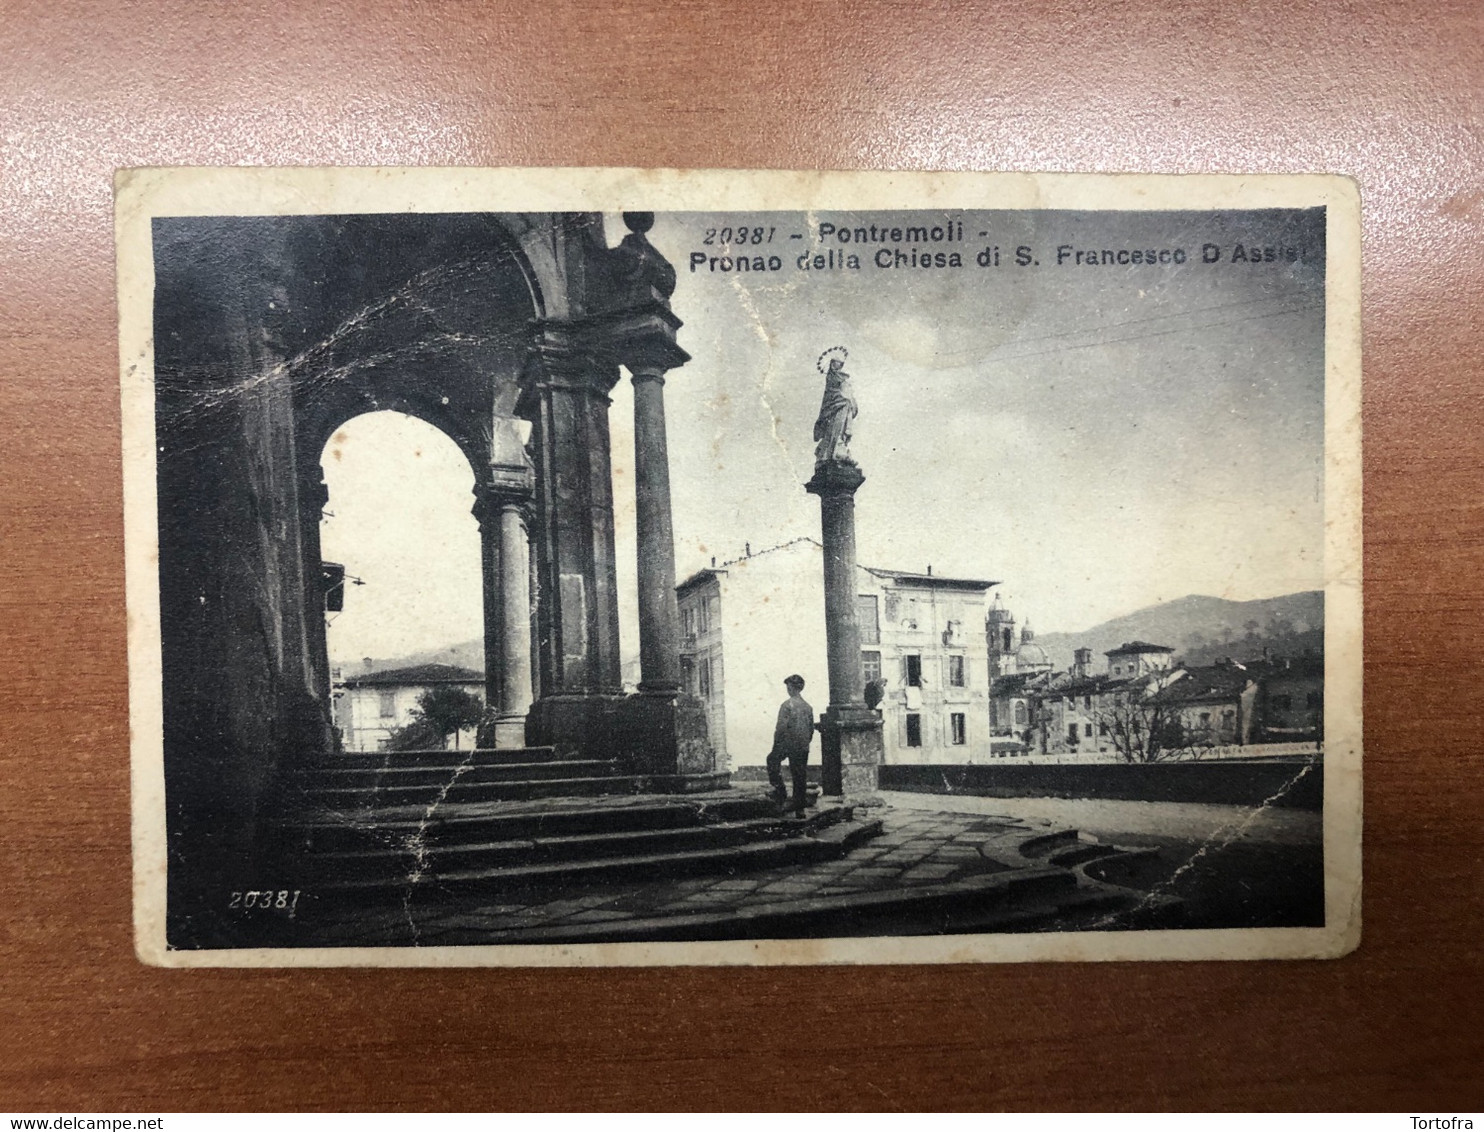 PONTREMOLI ( MASSA ) PRONAO DELLA CHIESA DI S. FRANCESCO D’ASSISI 1934 - Massa